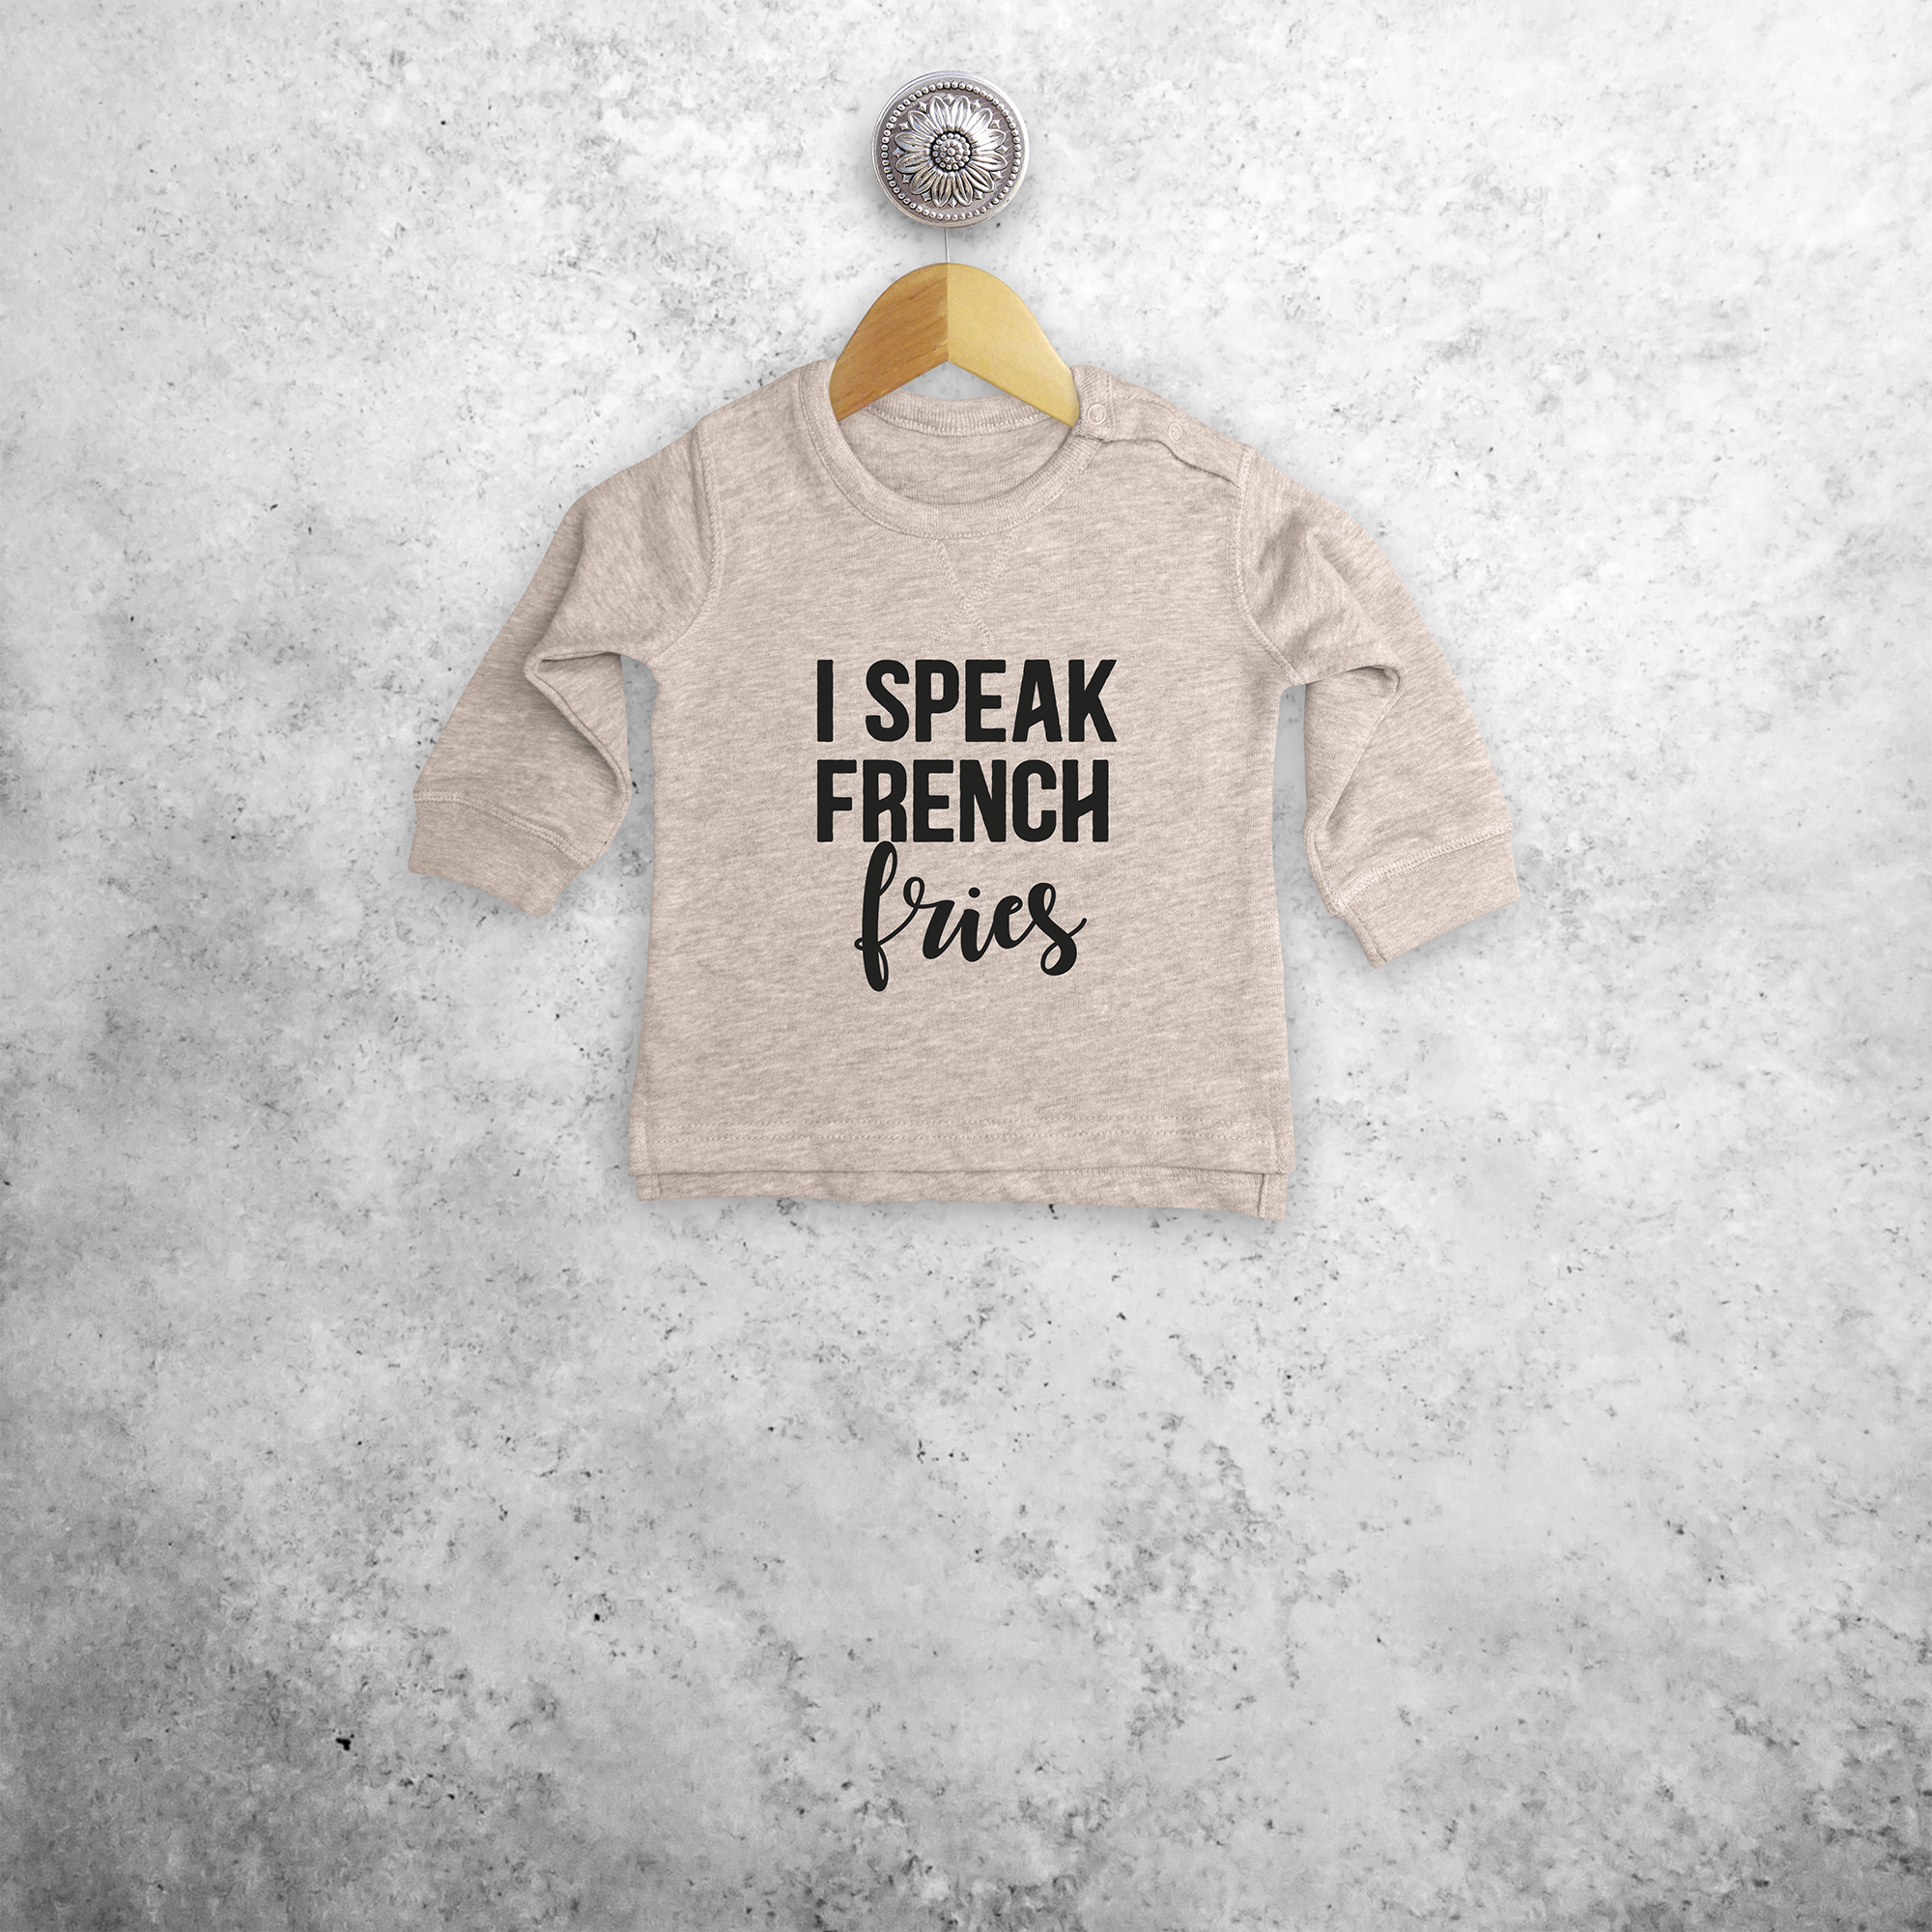 'I speak French fries' baby sweater